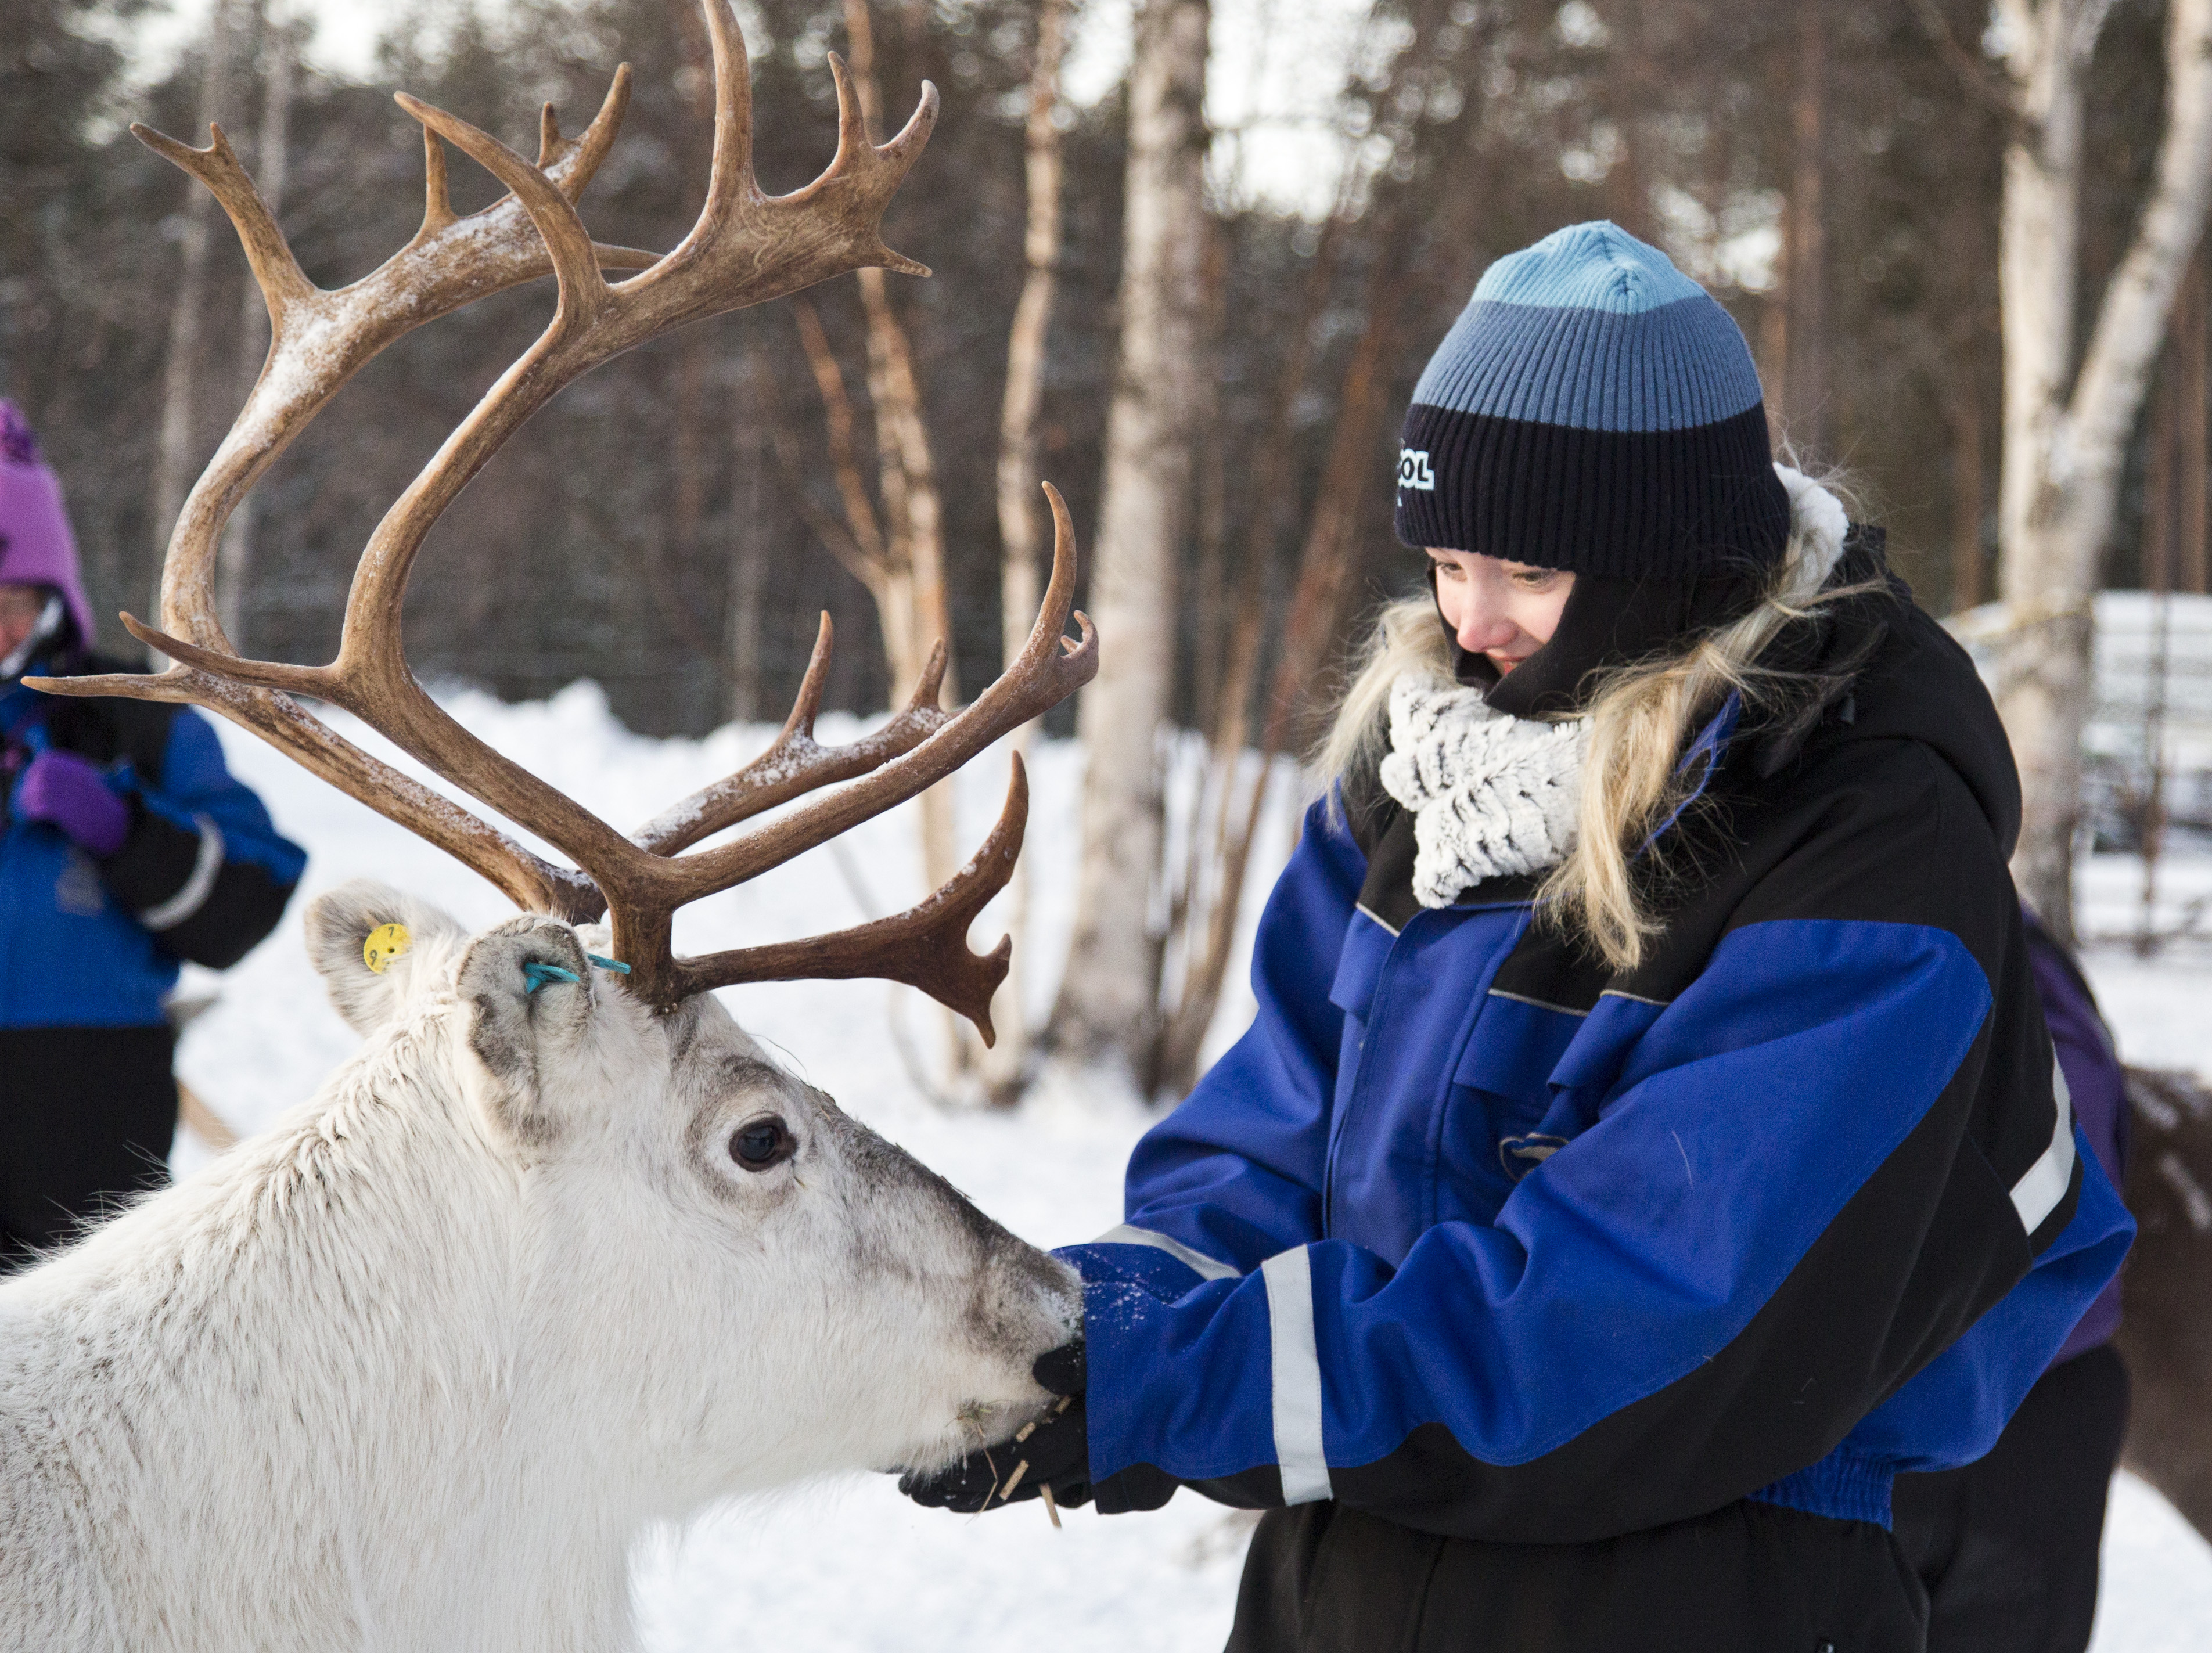 Feeding the reindeer